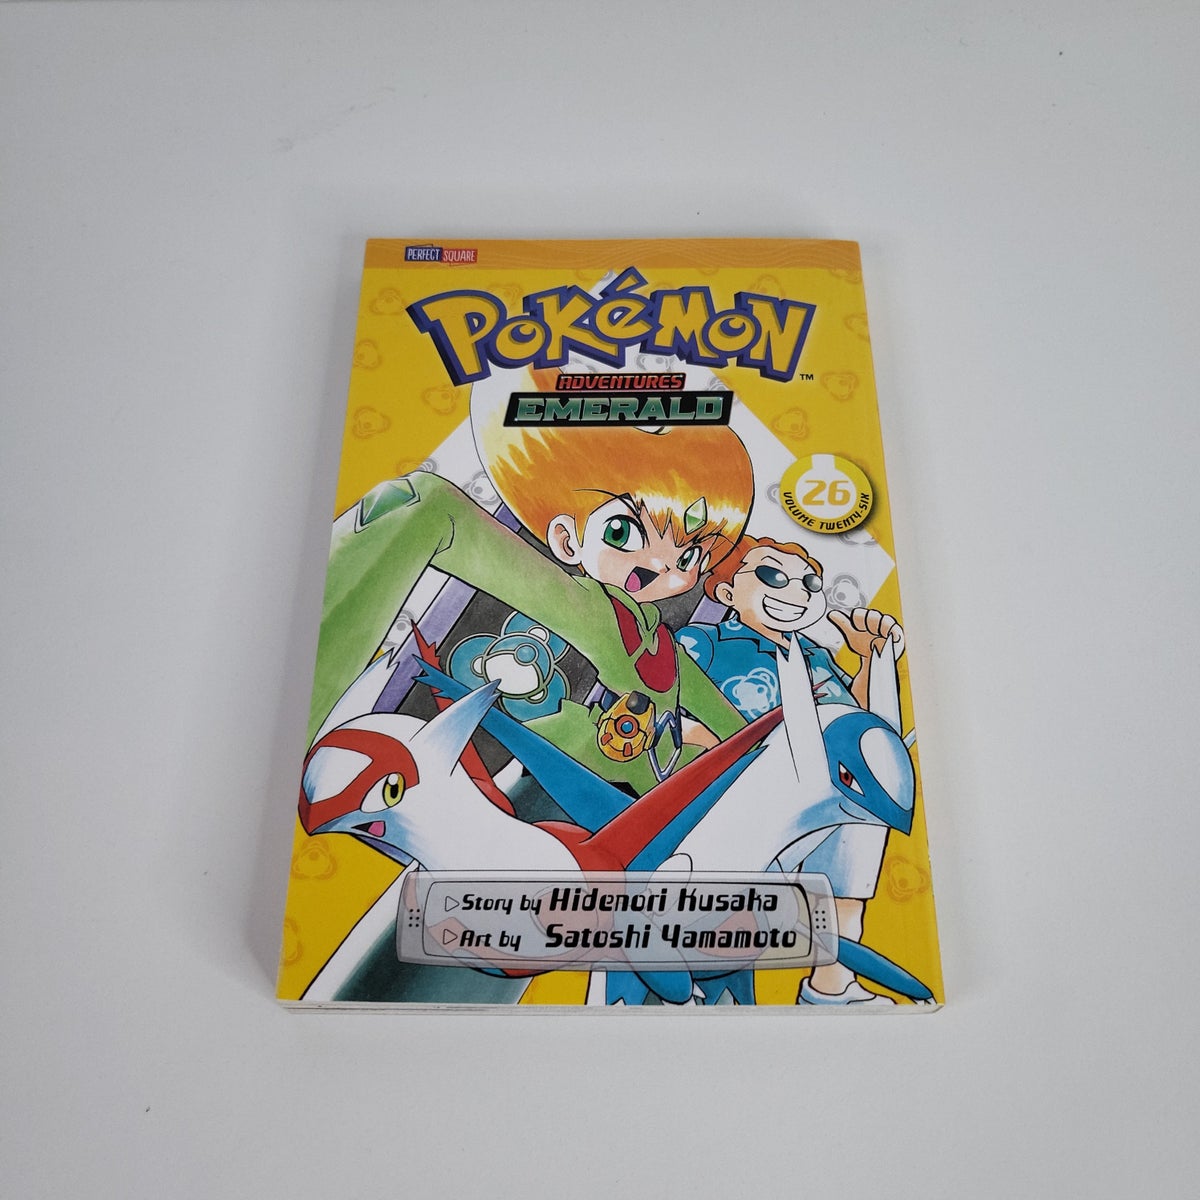 Pokémon Adventures: Pokémon Adventures (Emerald), Vol. 28 (Series